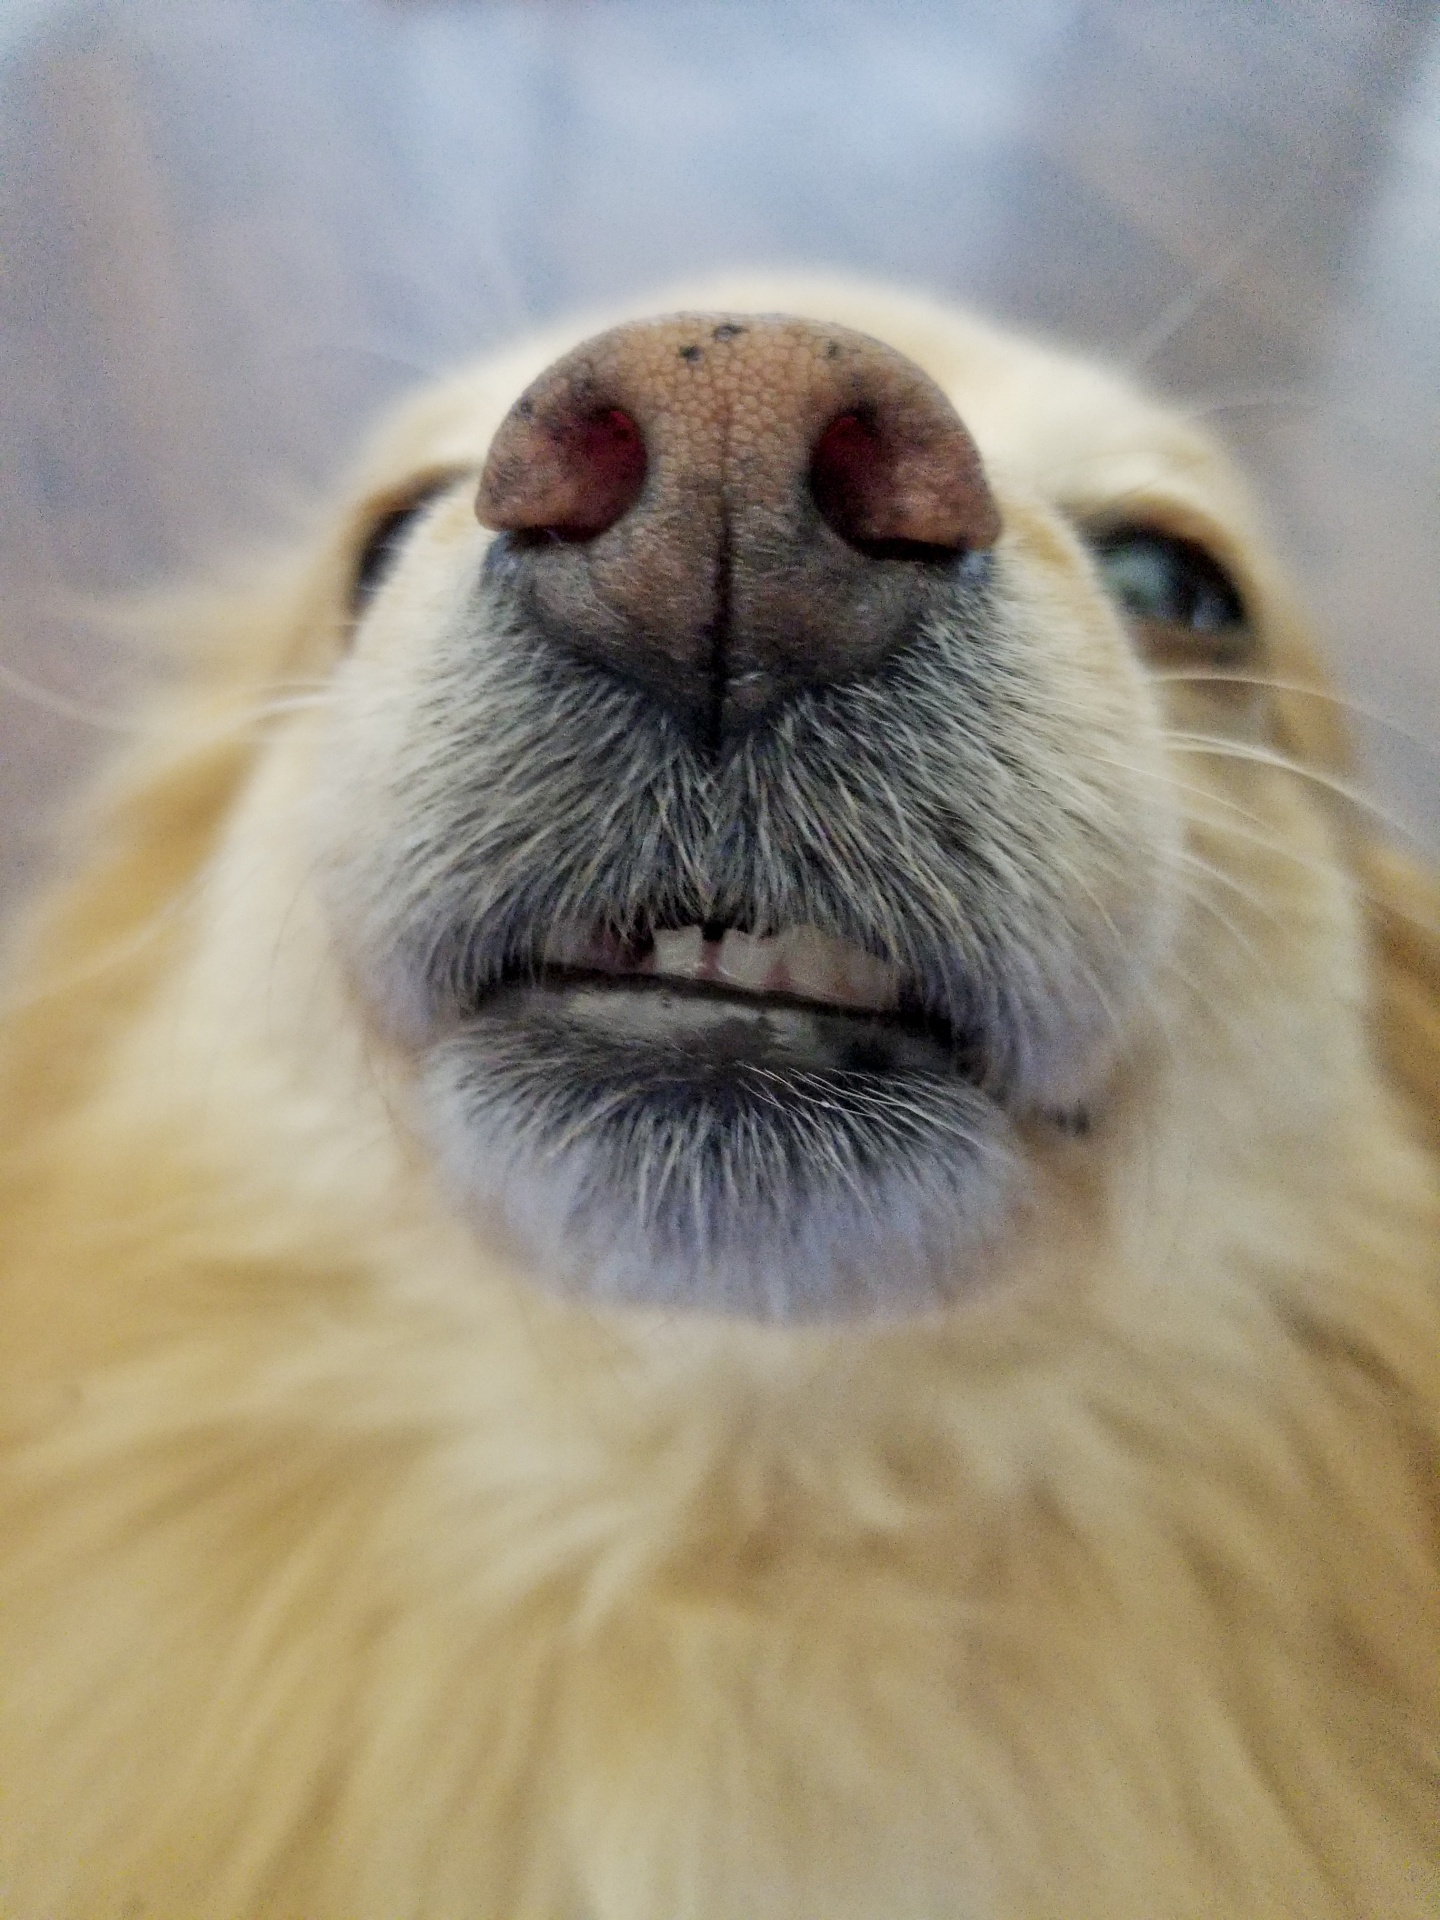 A Dog's Nose